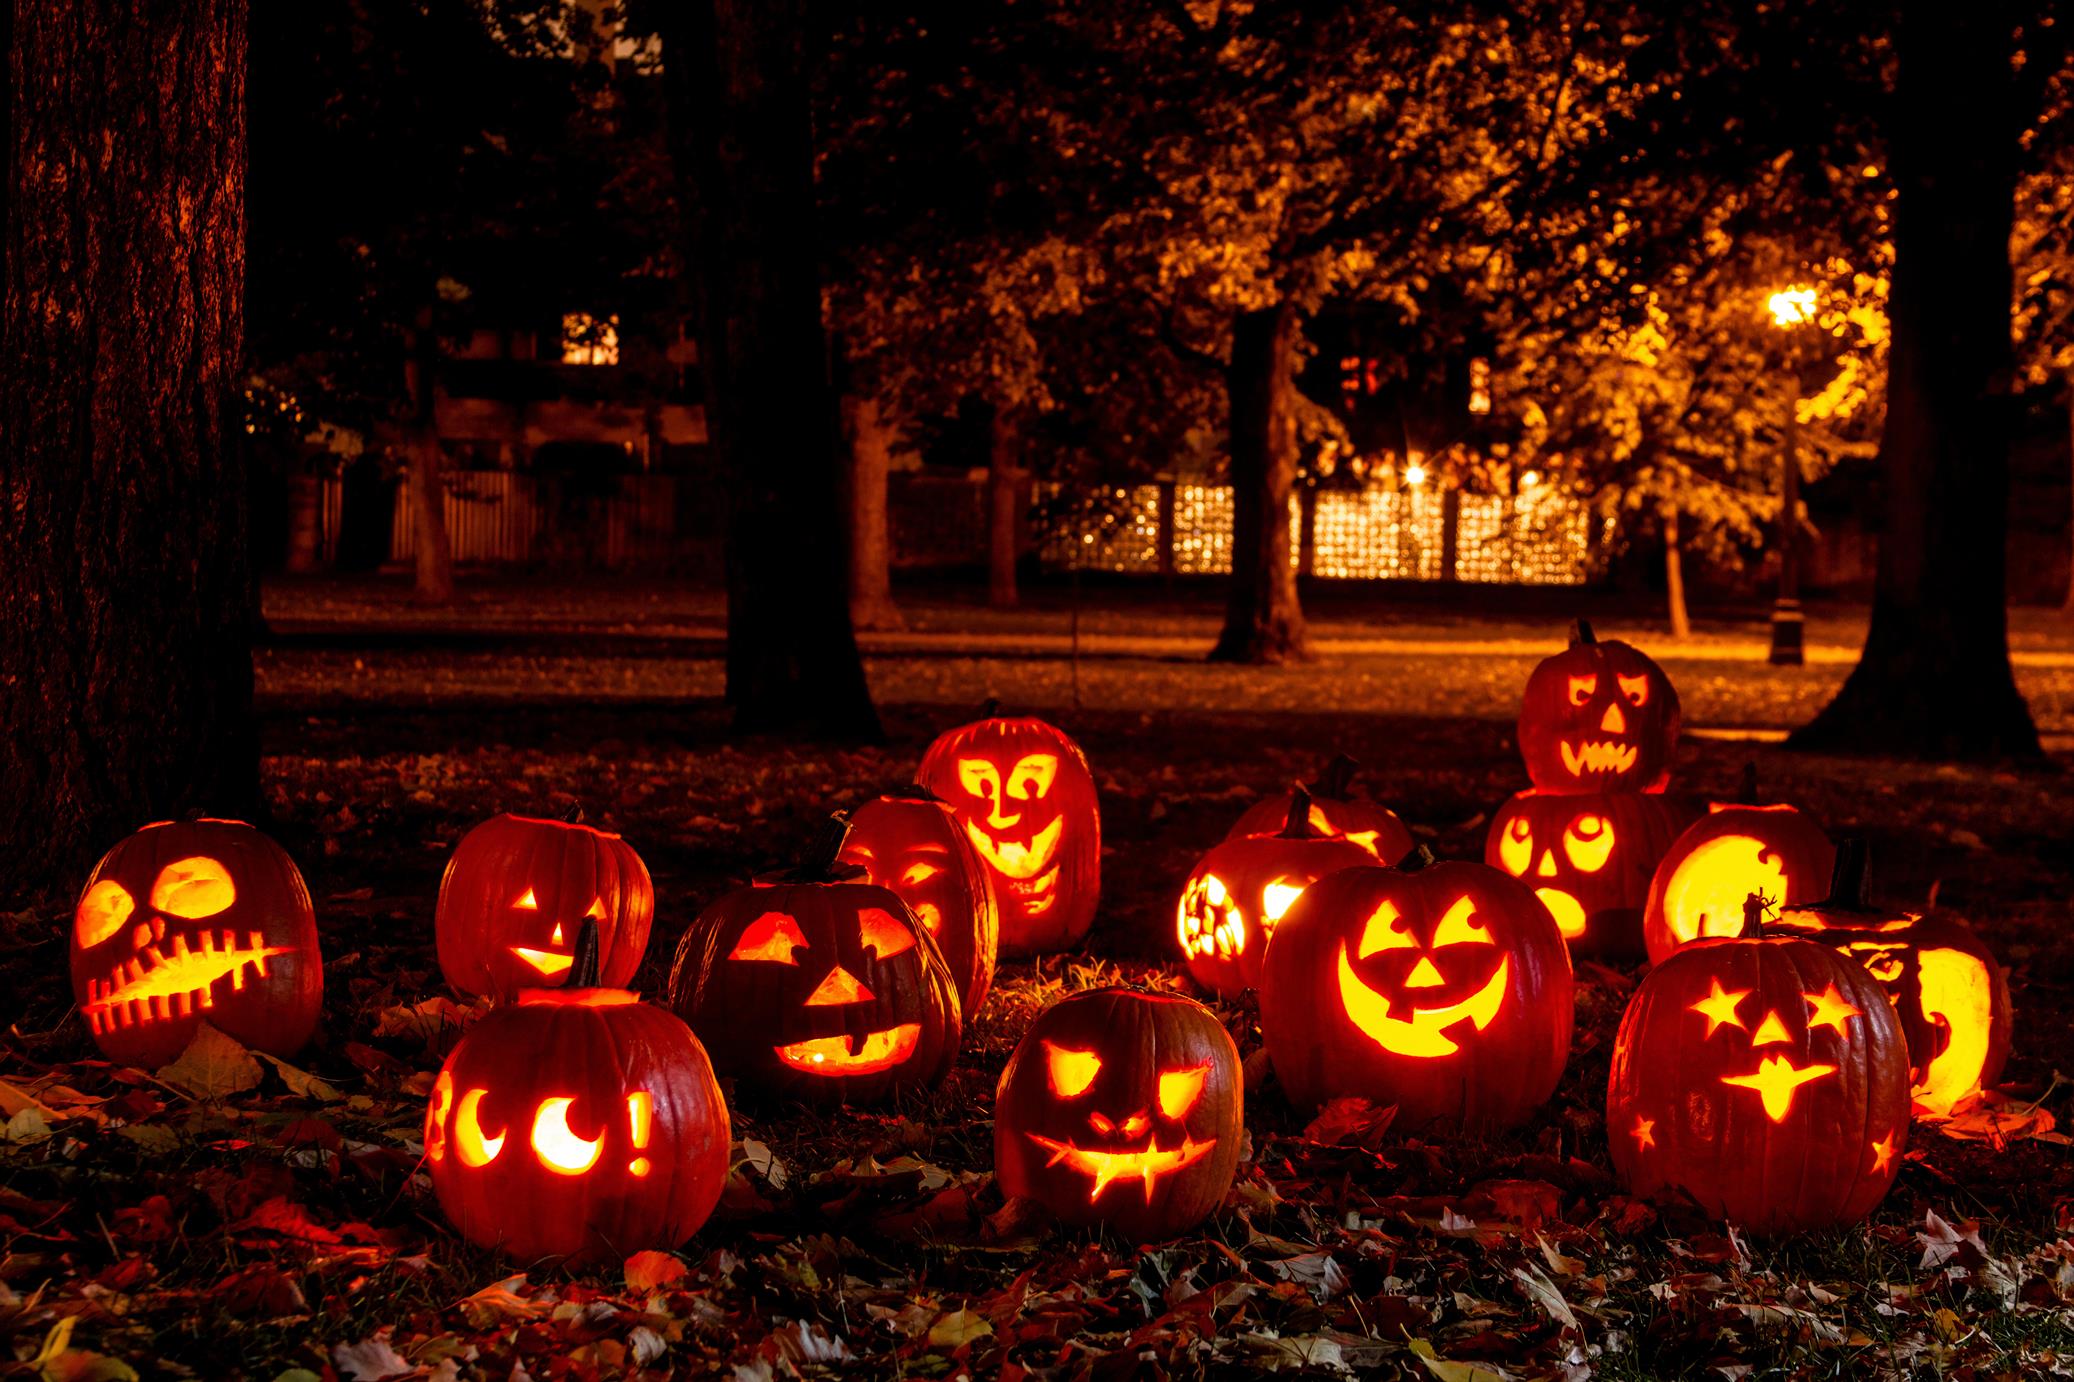 Trick or treat: традиции, суеверия и лексика на Halloween